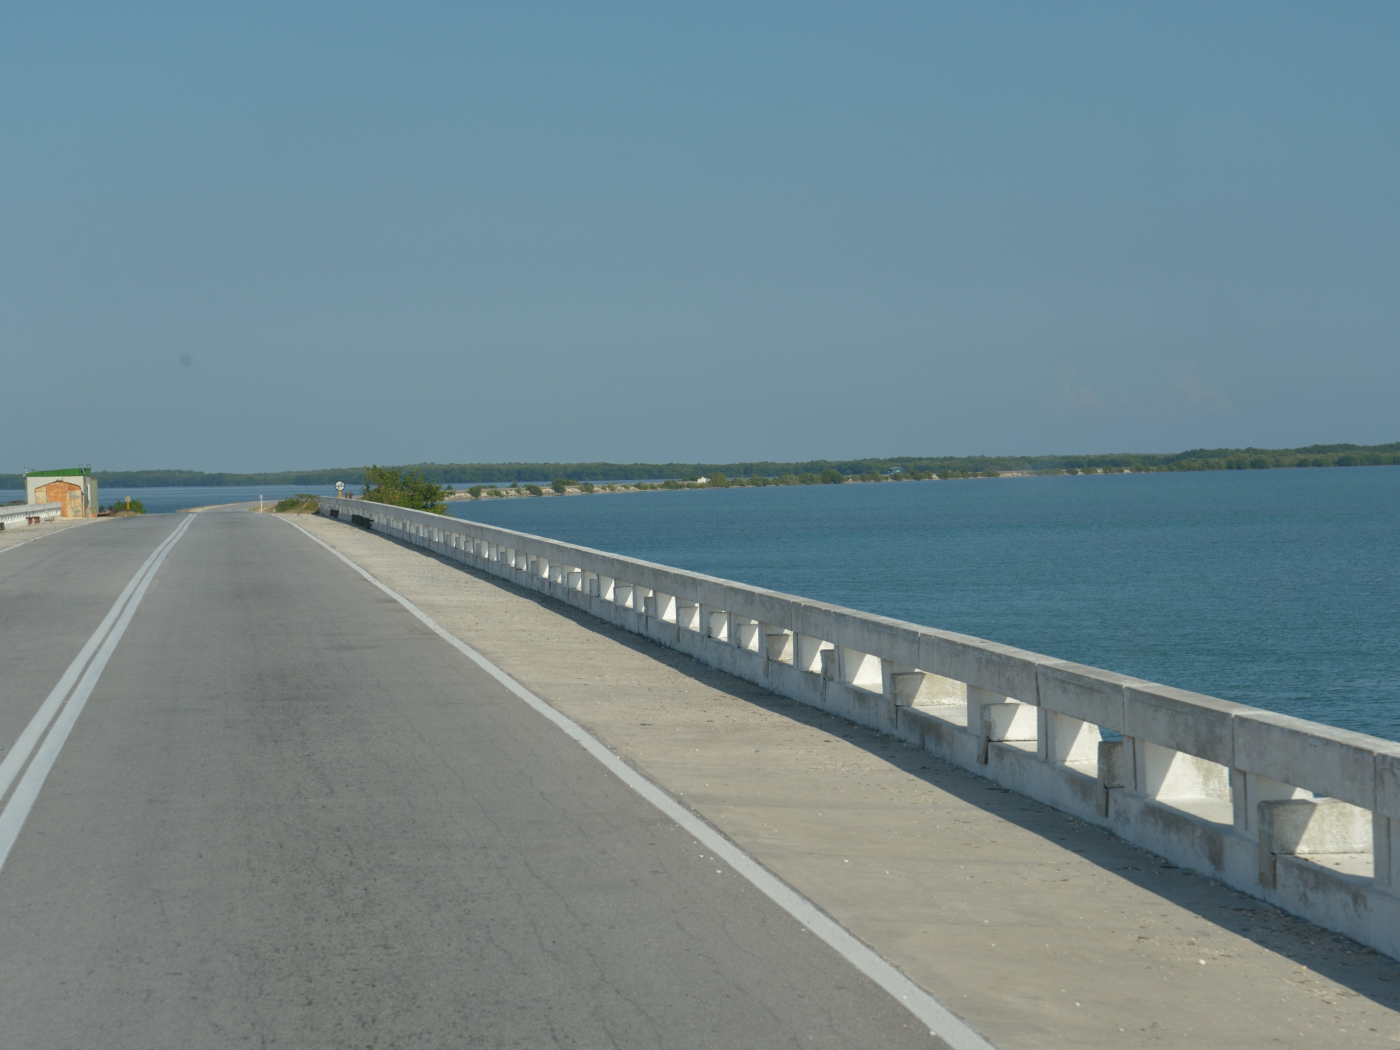 The road along the coast in the resort of Cayo Santa Maria, Cuba